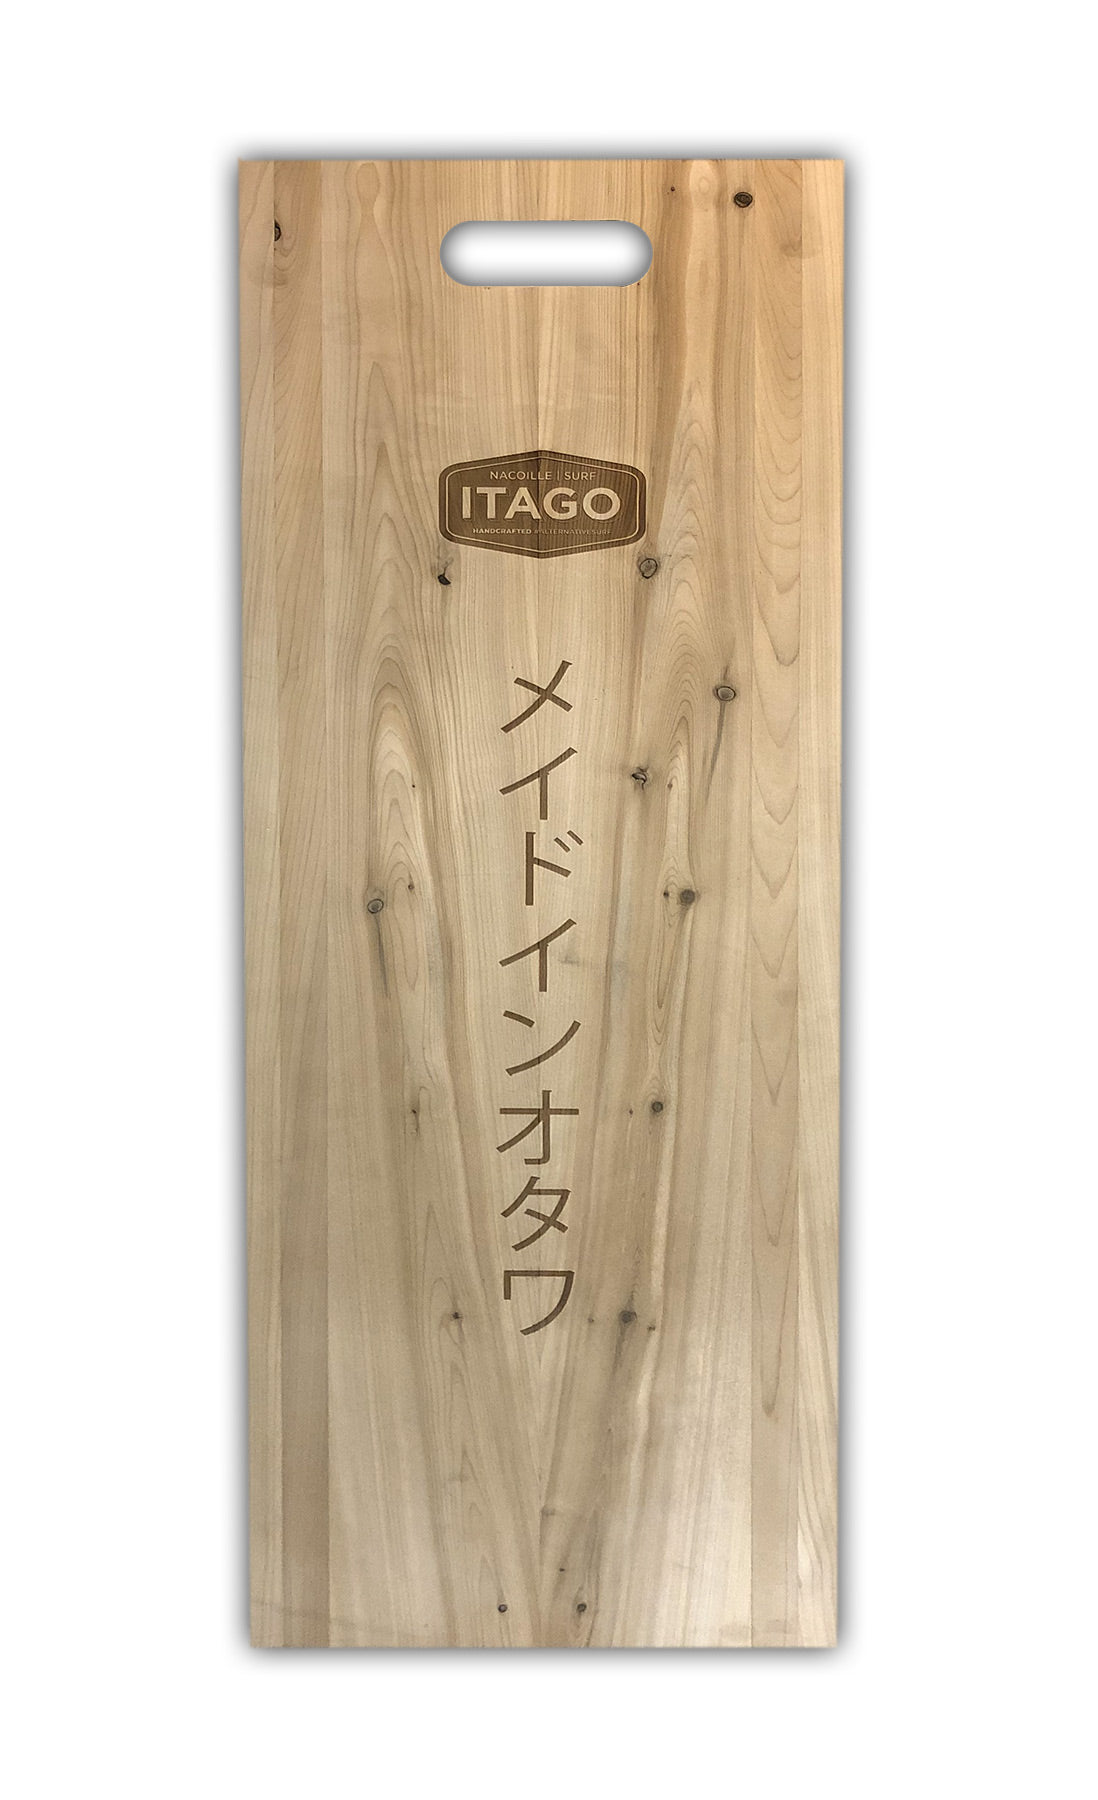 Itago - Eastern White Cedar